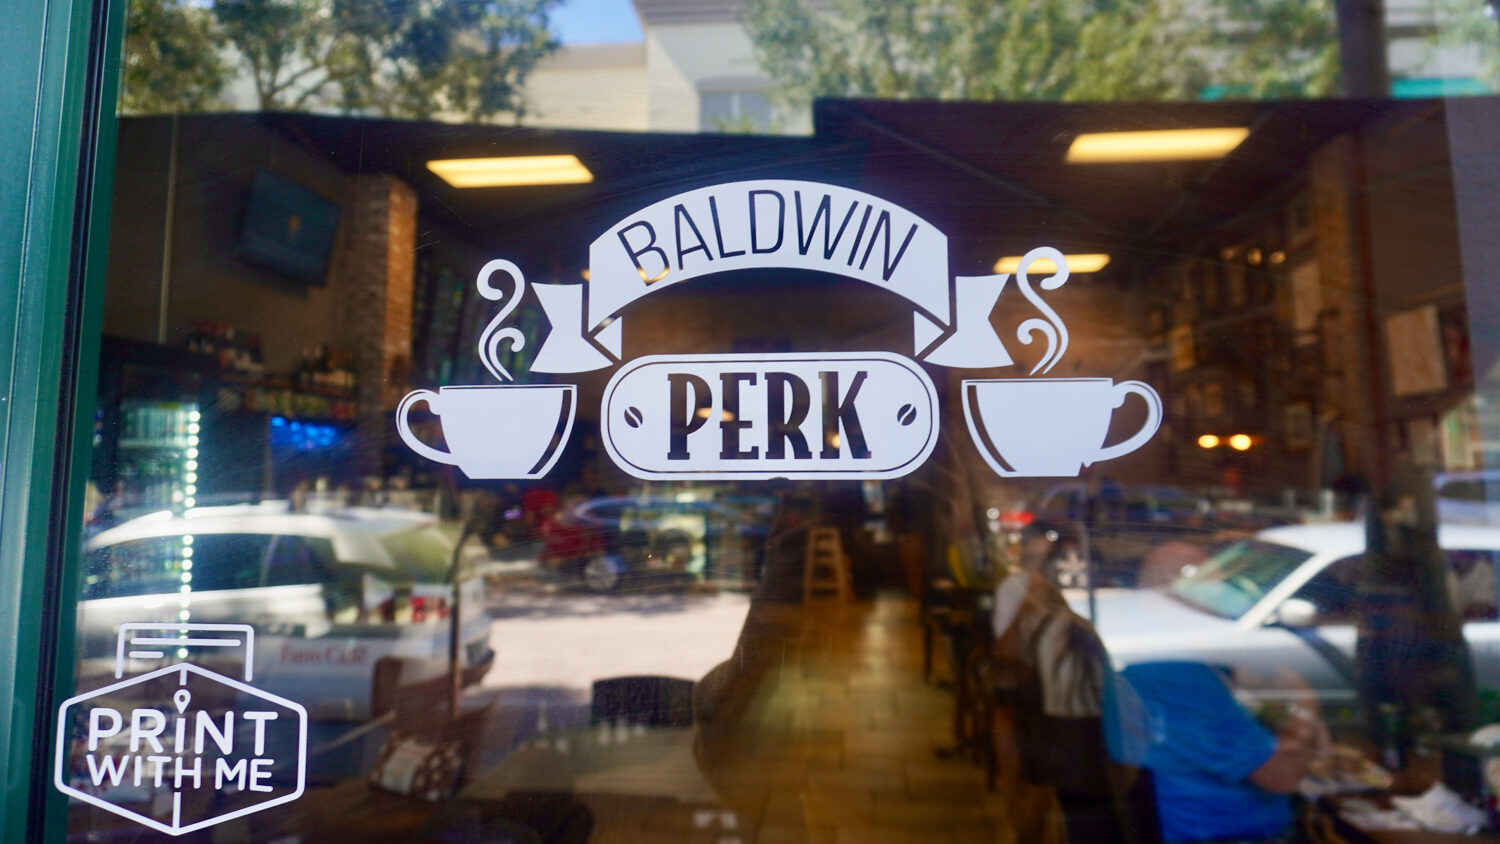 glass window with baldwin perk decal and coffee cups